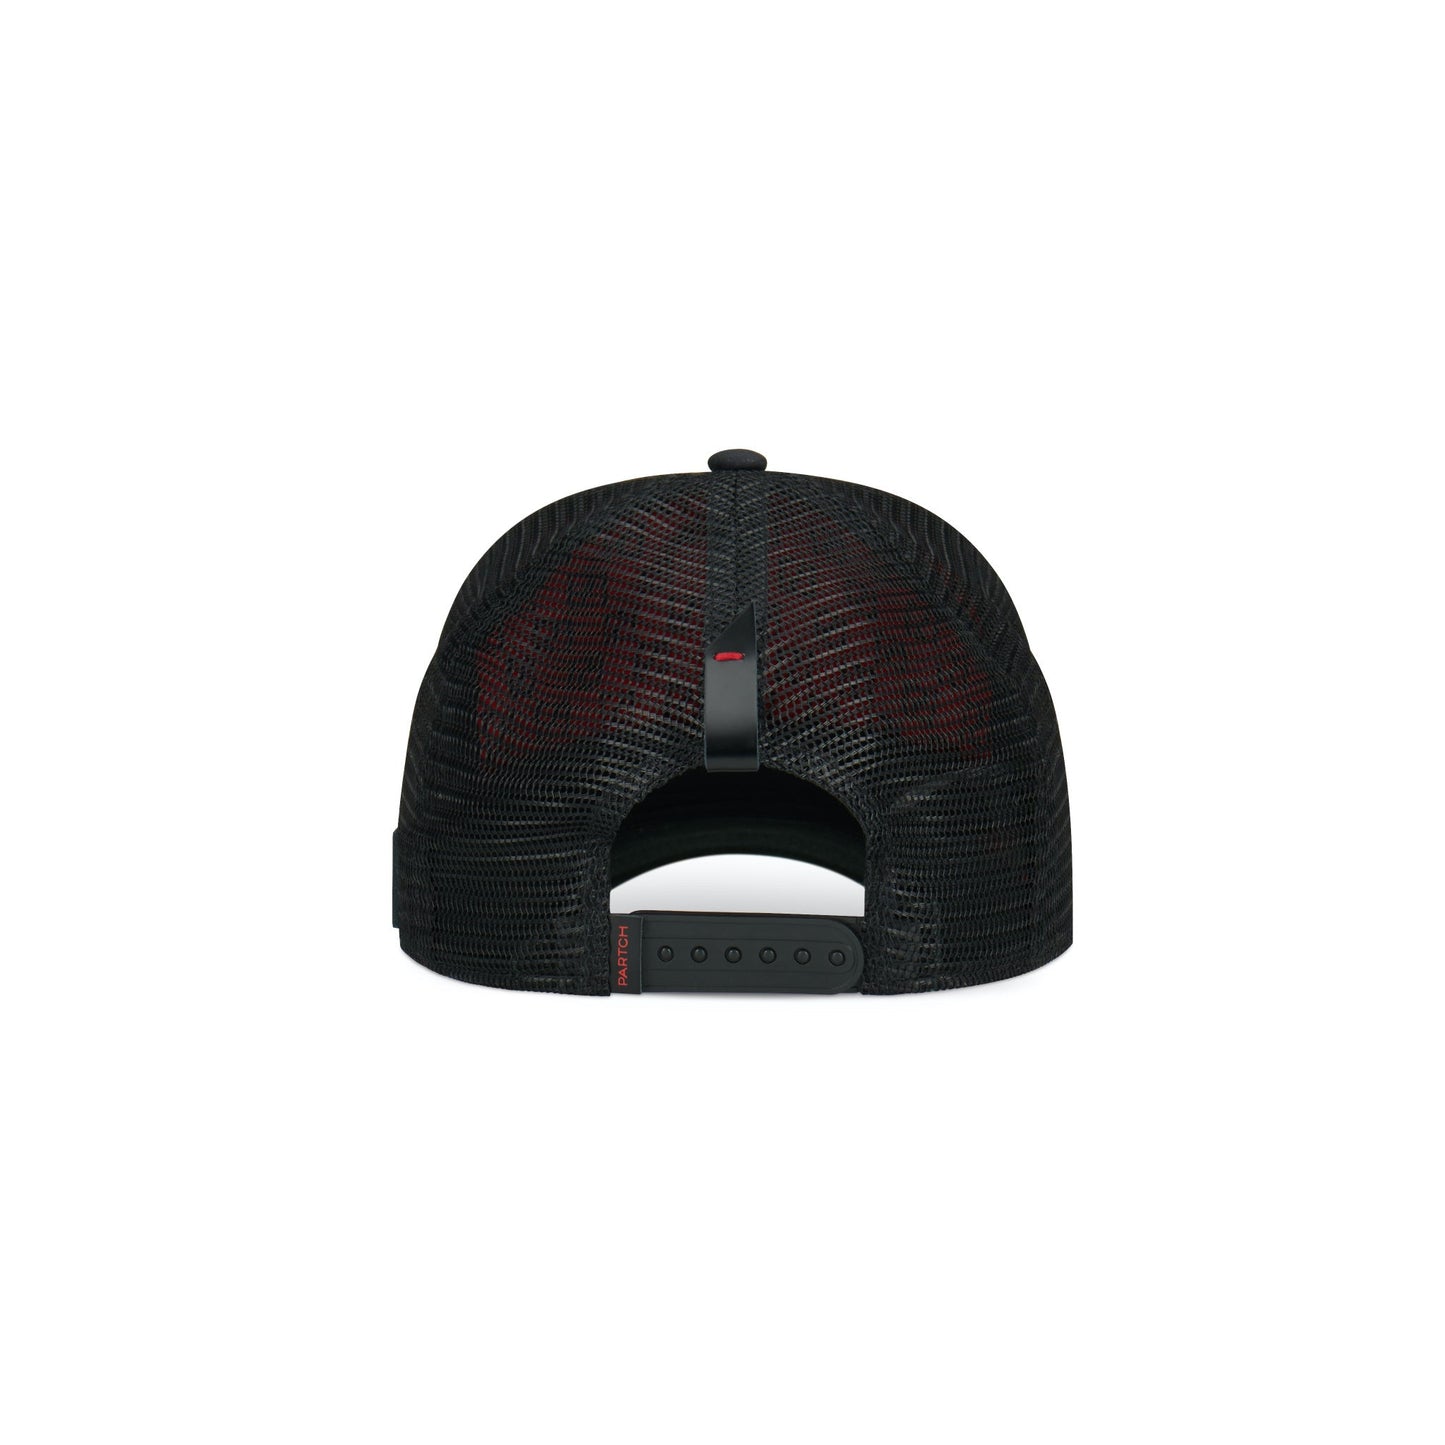 Partch Trucker Hat Black with PARTCH-Clip Inspyr Back View